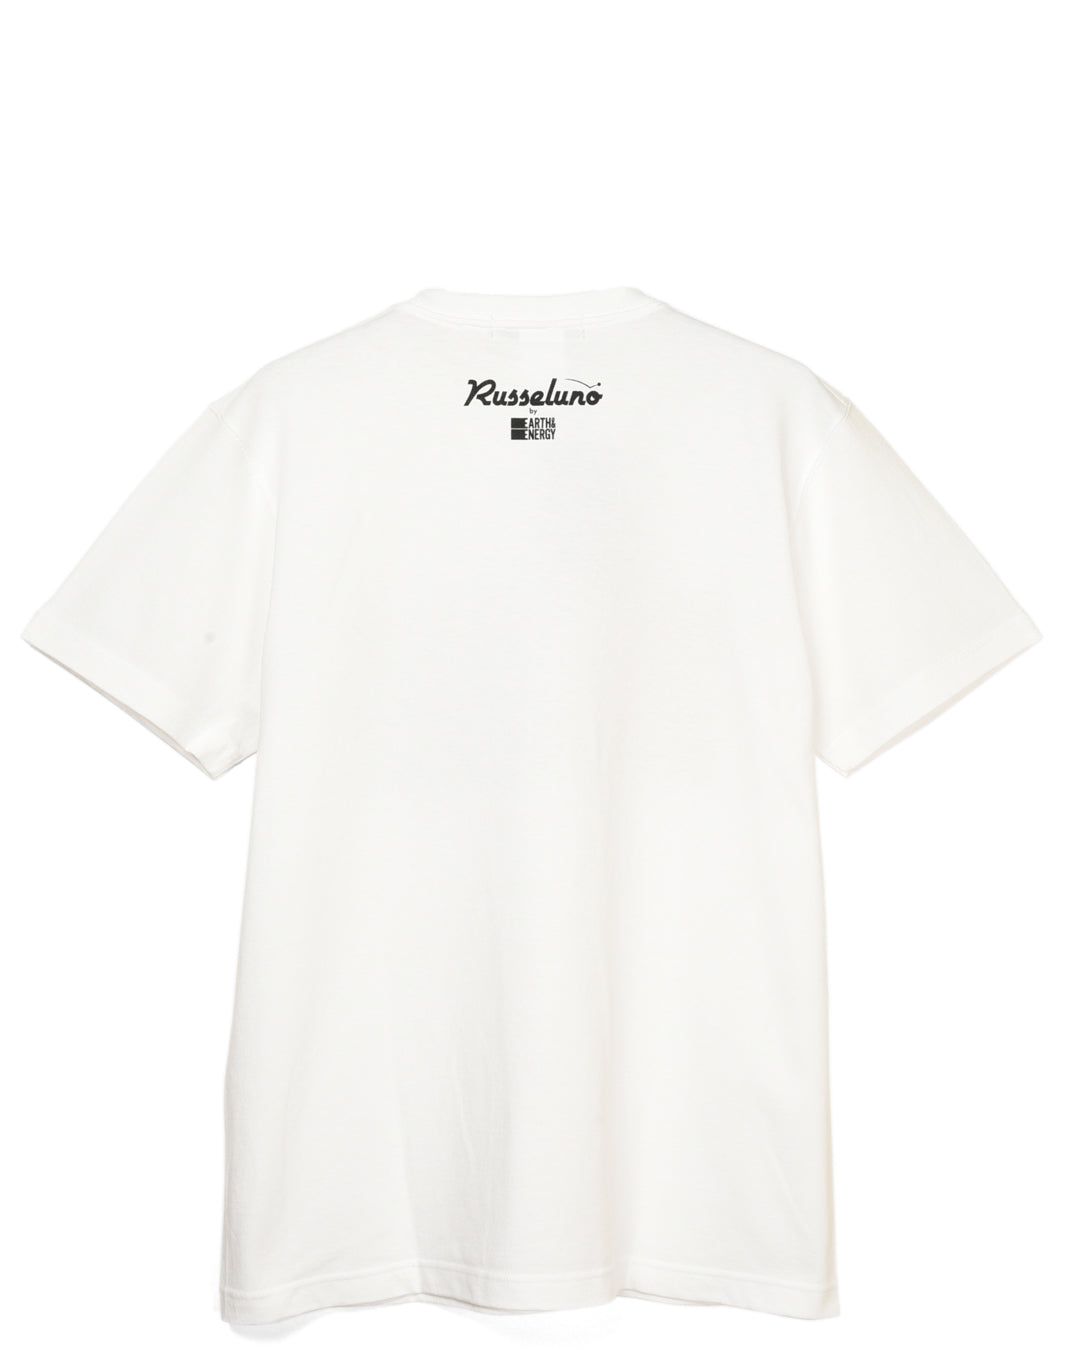 Russeluno by E&E T-shirts